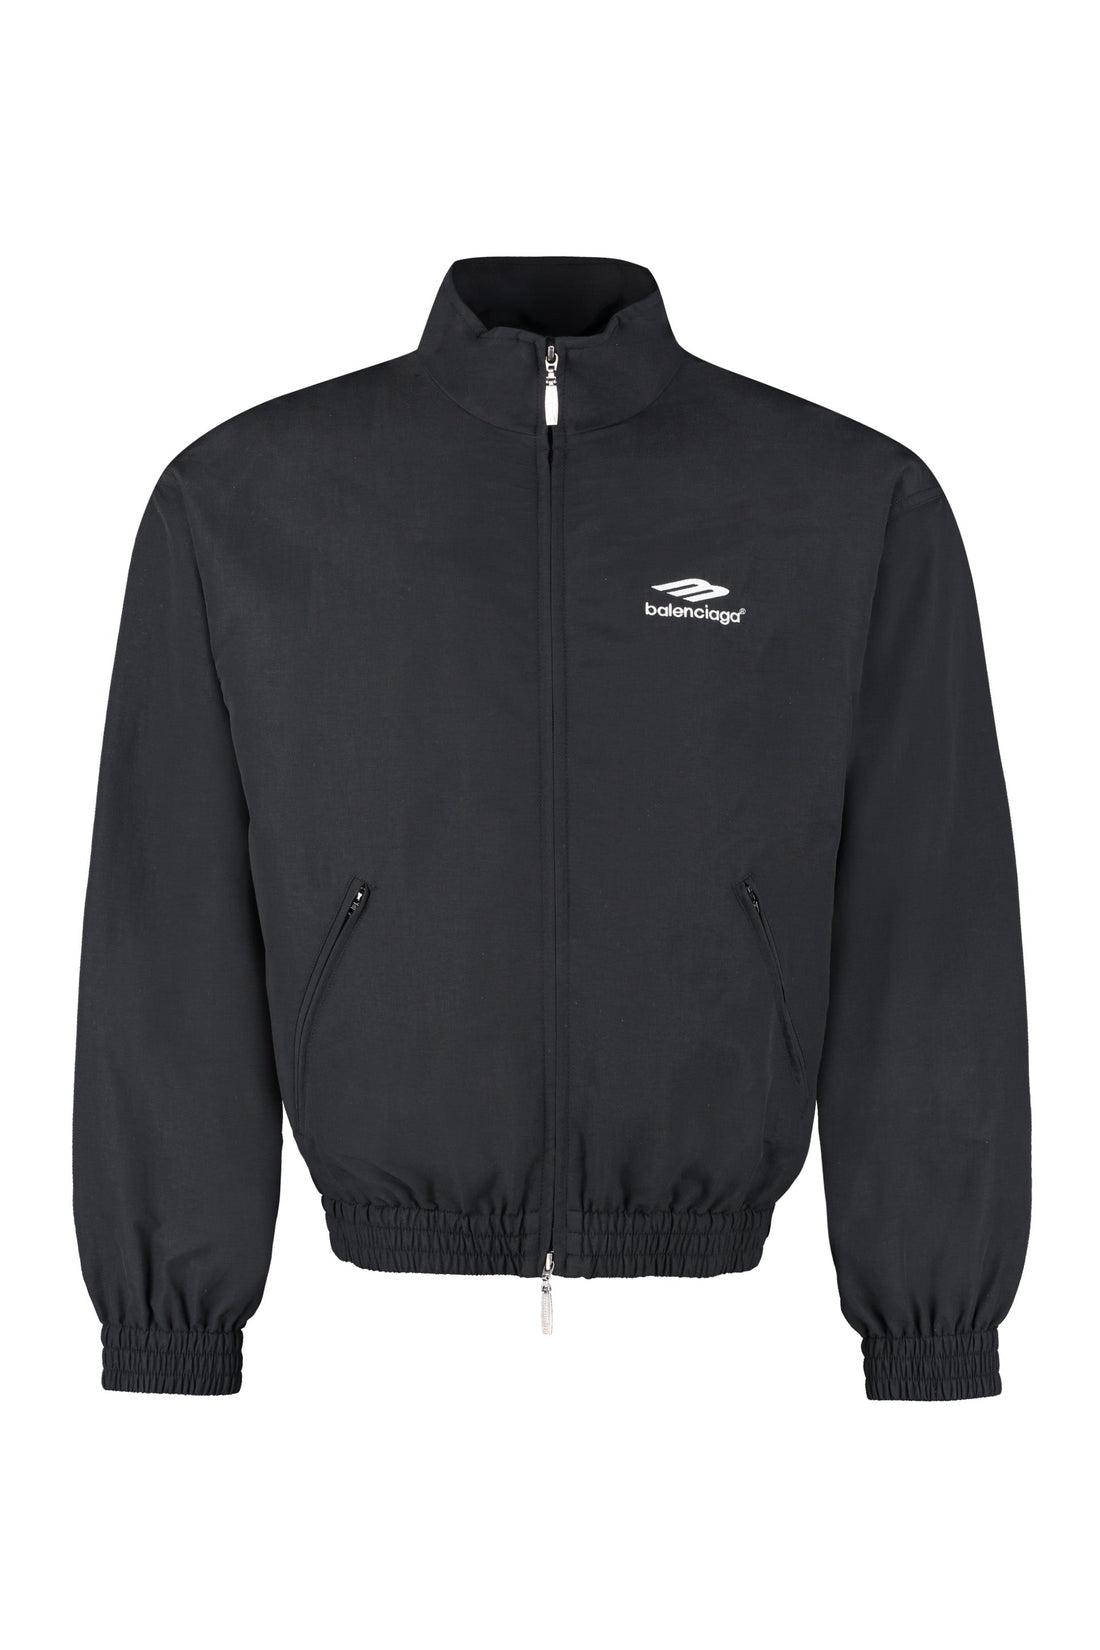 Balenciaga-OUTLET-SALE-3B Sports Icon full-zip sweatshirt-ARCHIVIST